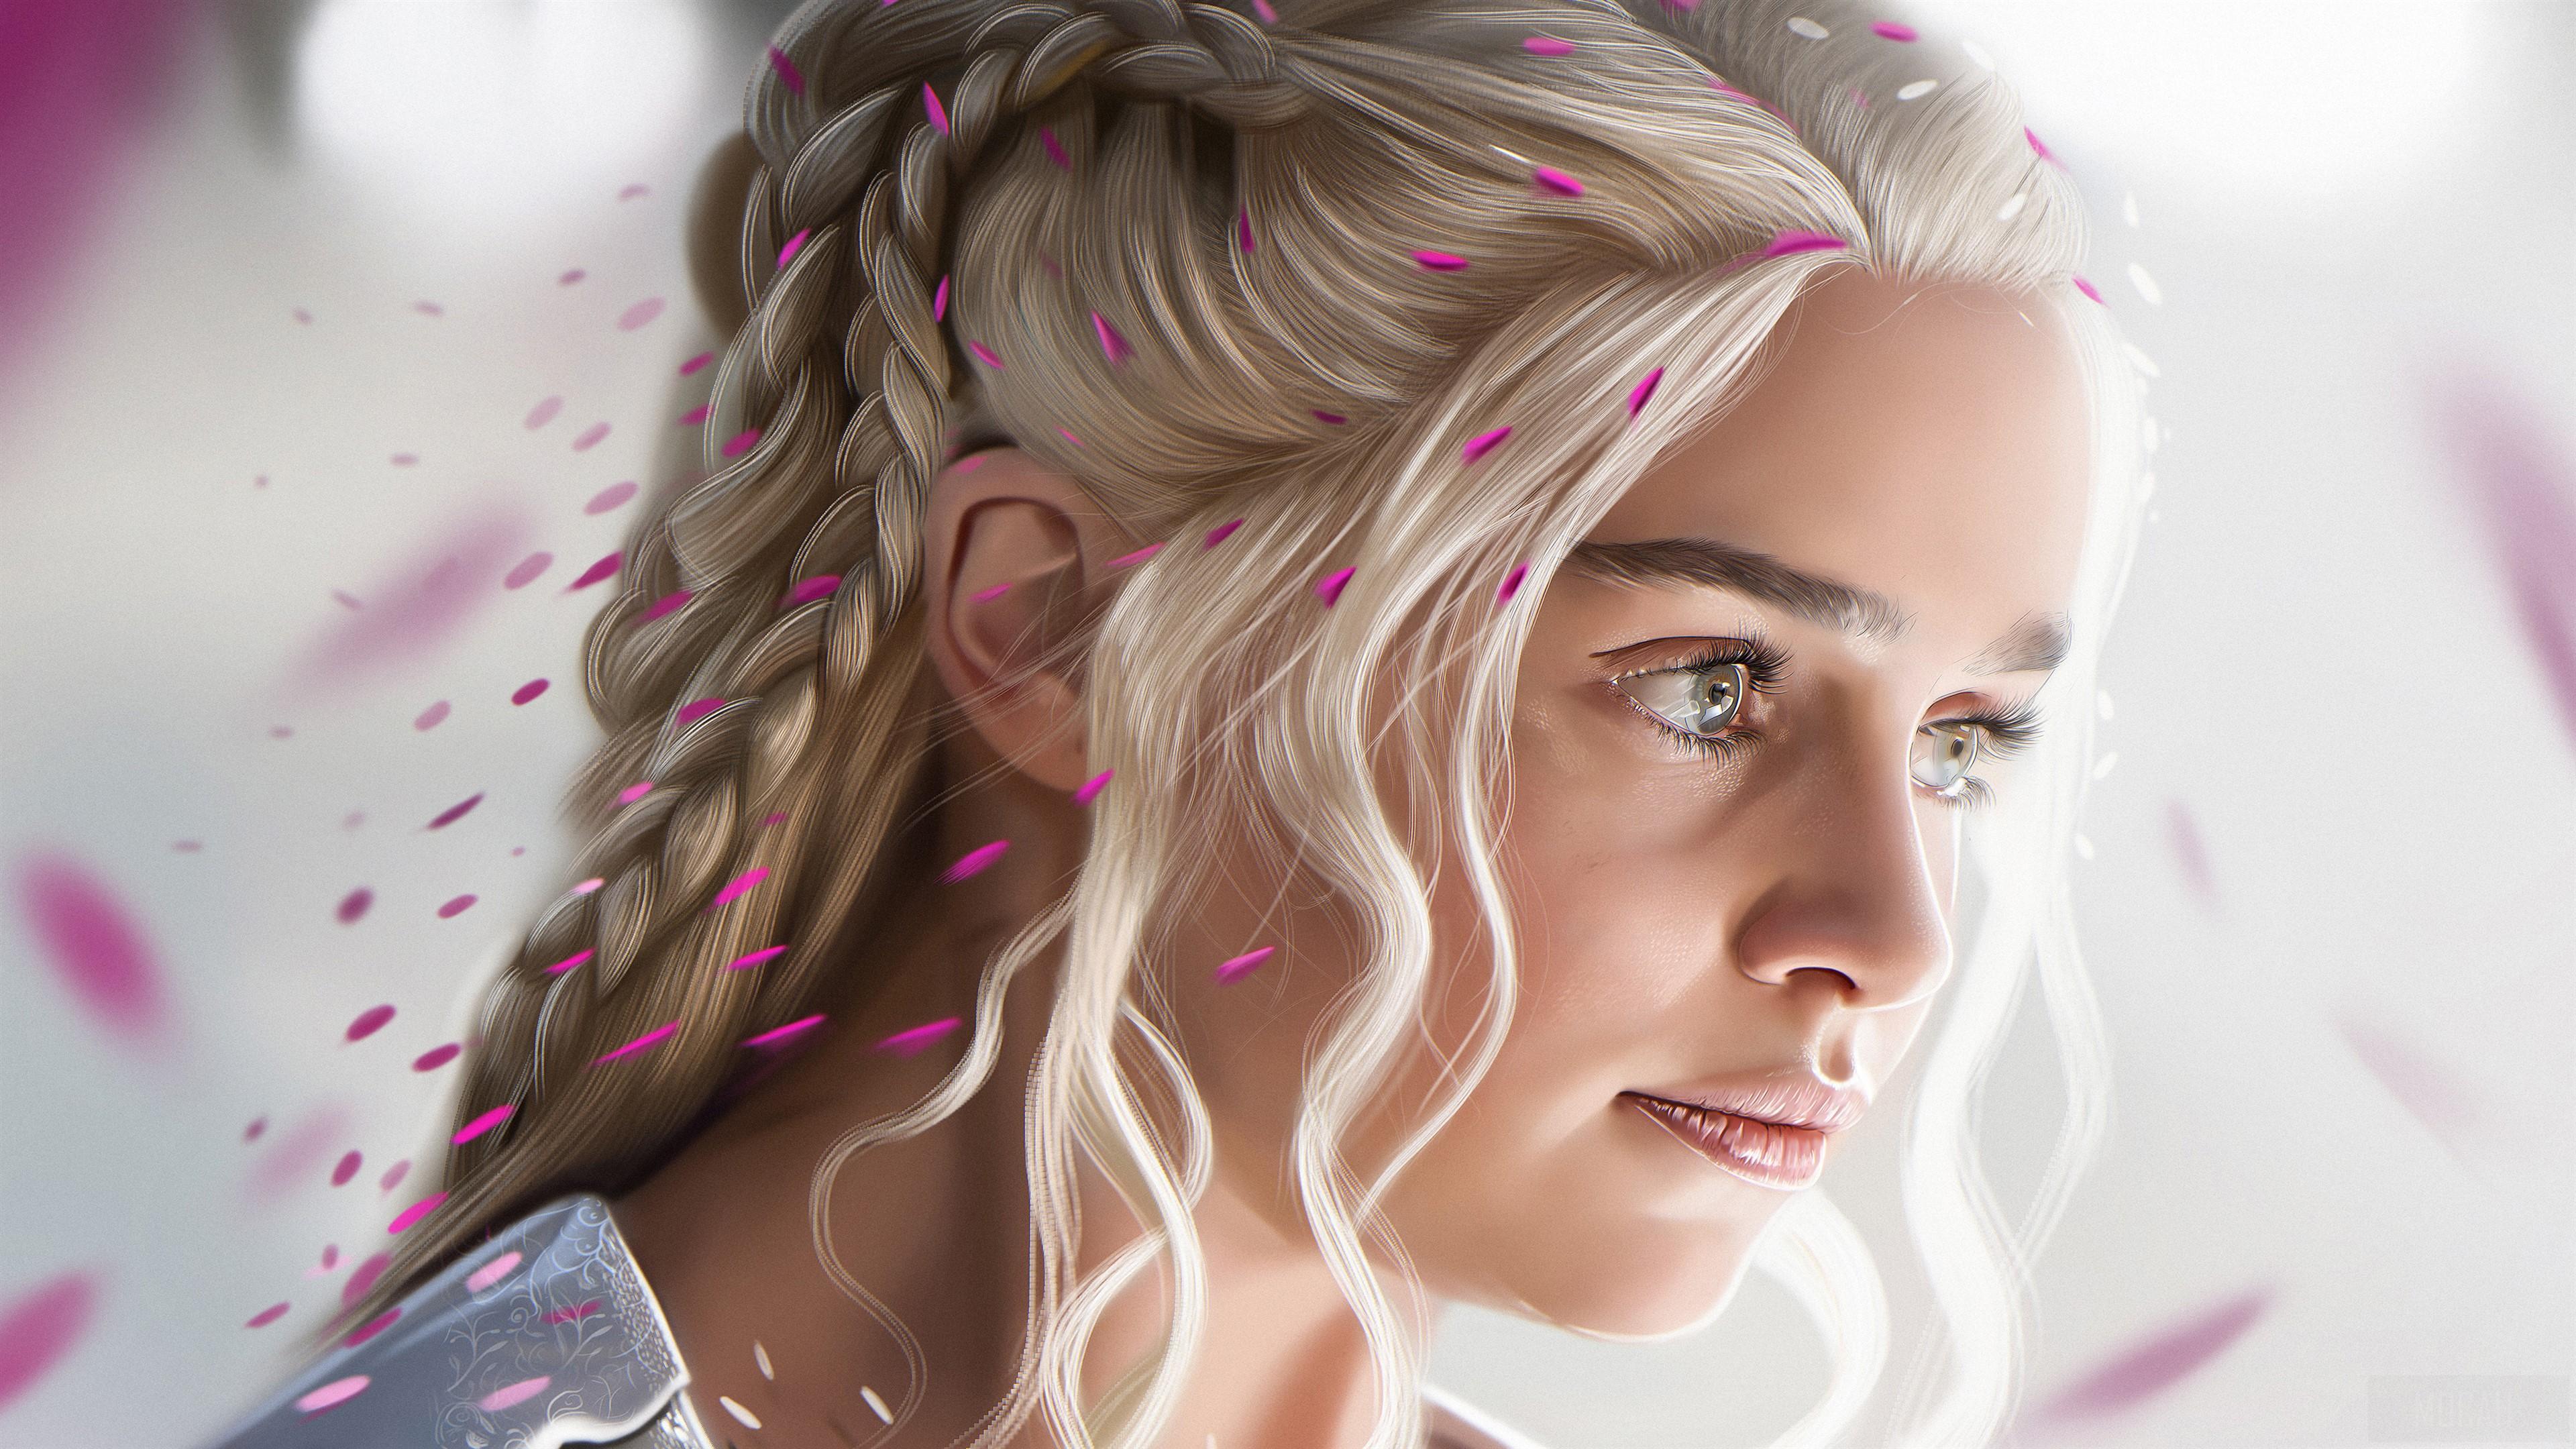 HD wallpaper, Daenerys Targaryen Artwork 4K